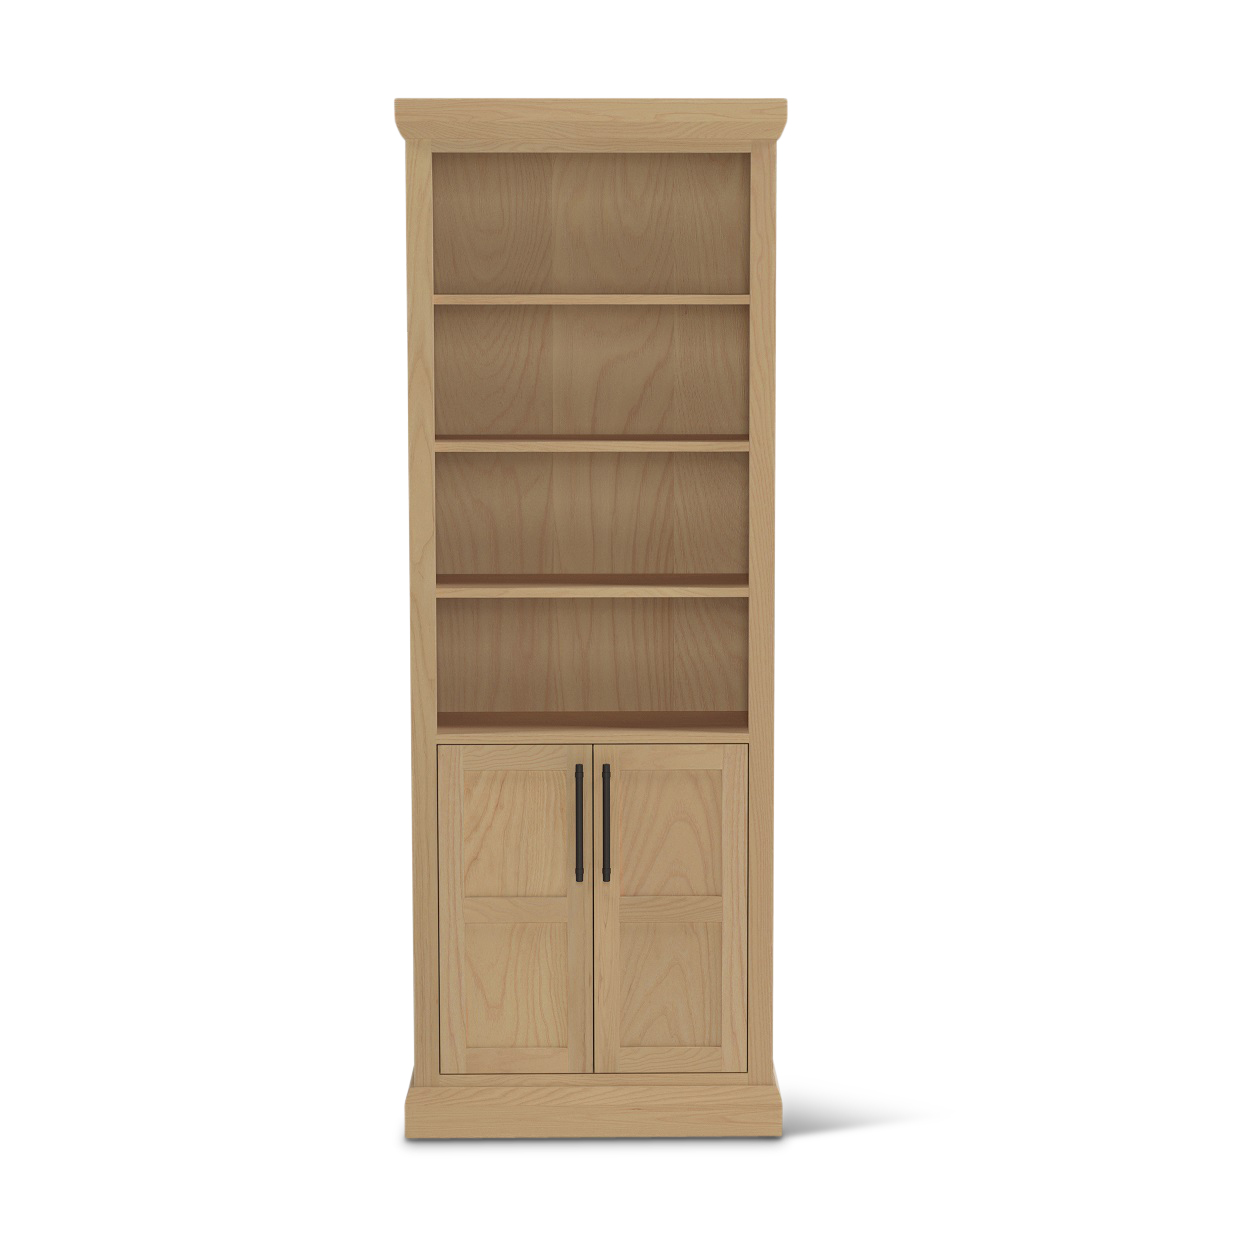 78" tall Bureau ash wood contemporary Danish bookshelf with doors